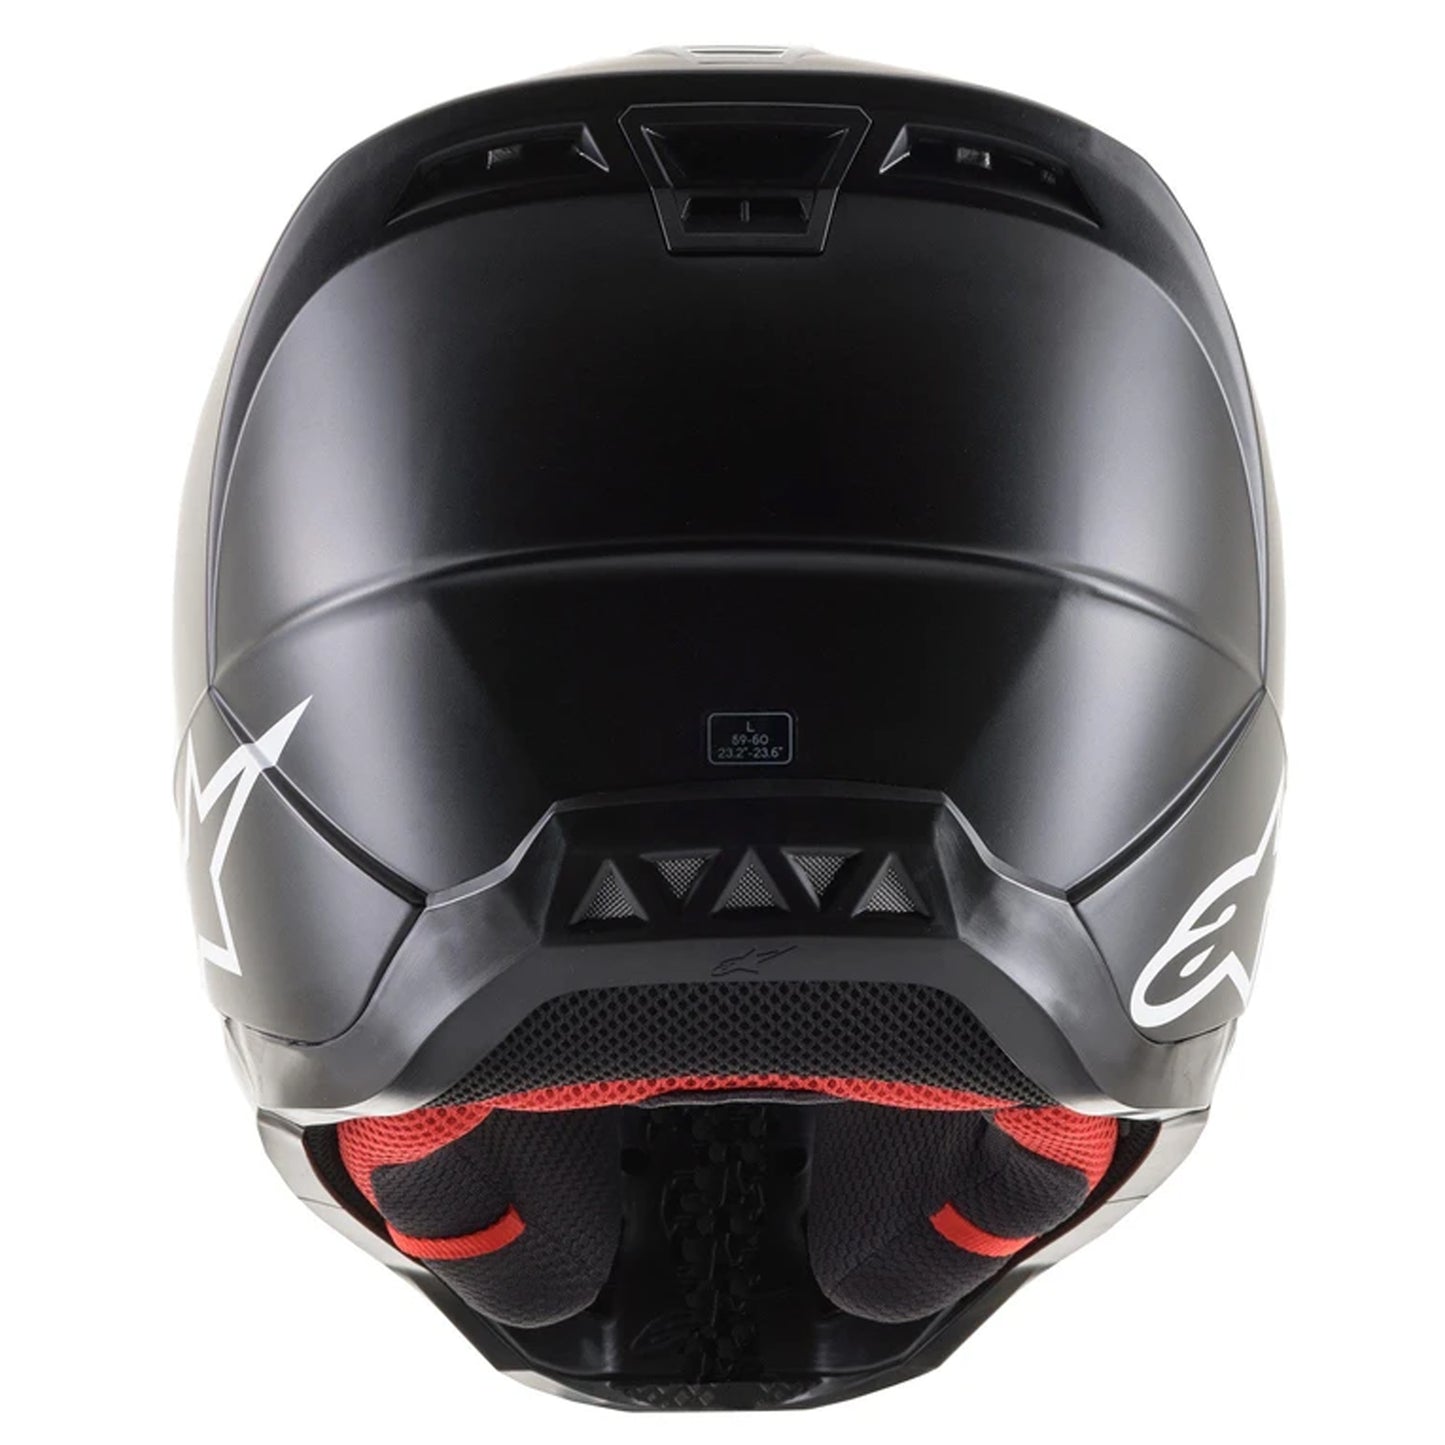 Alpinestars S-M5 Solid Helmet (Matte Black)